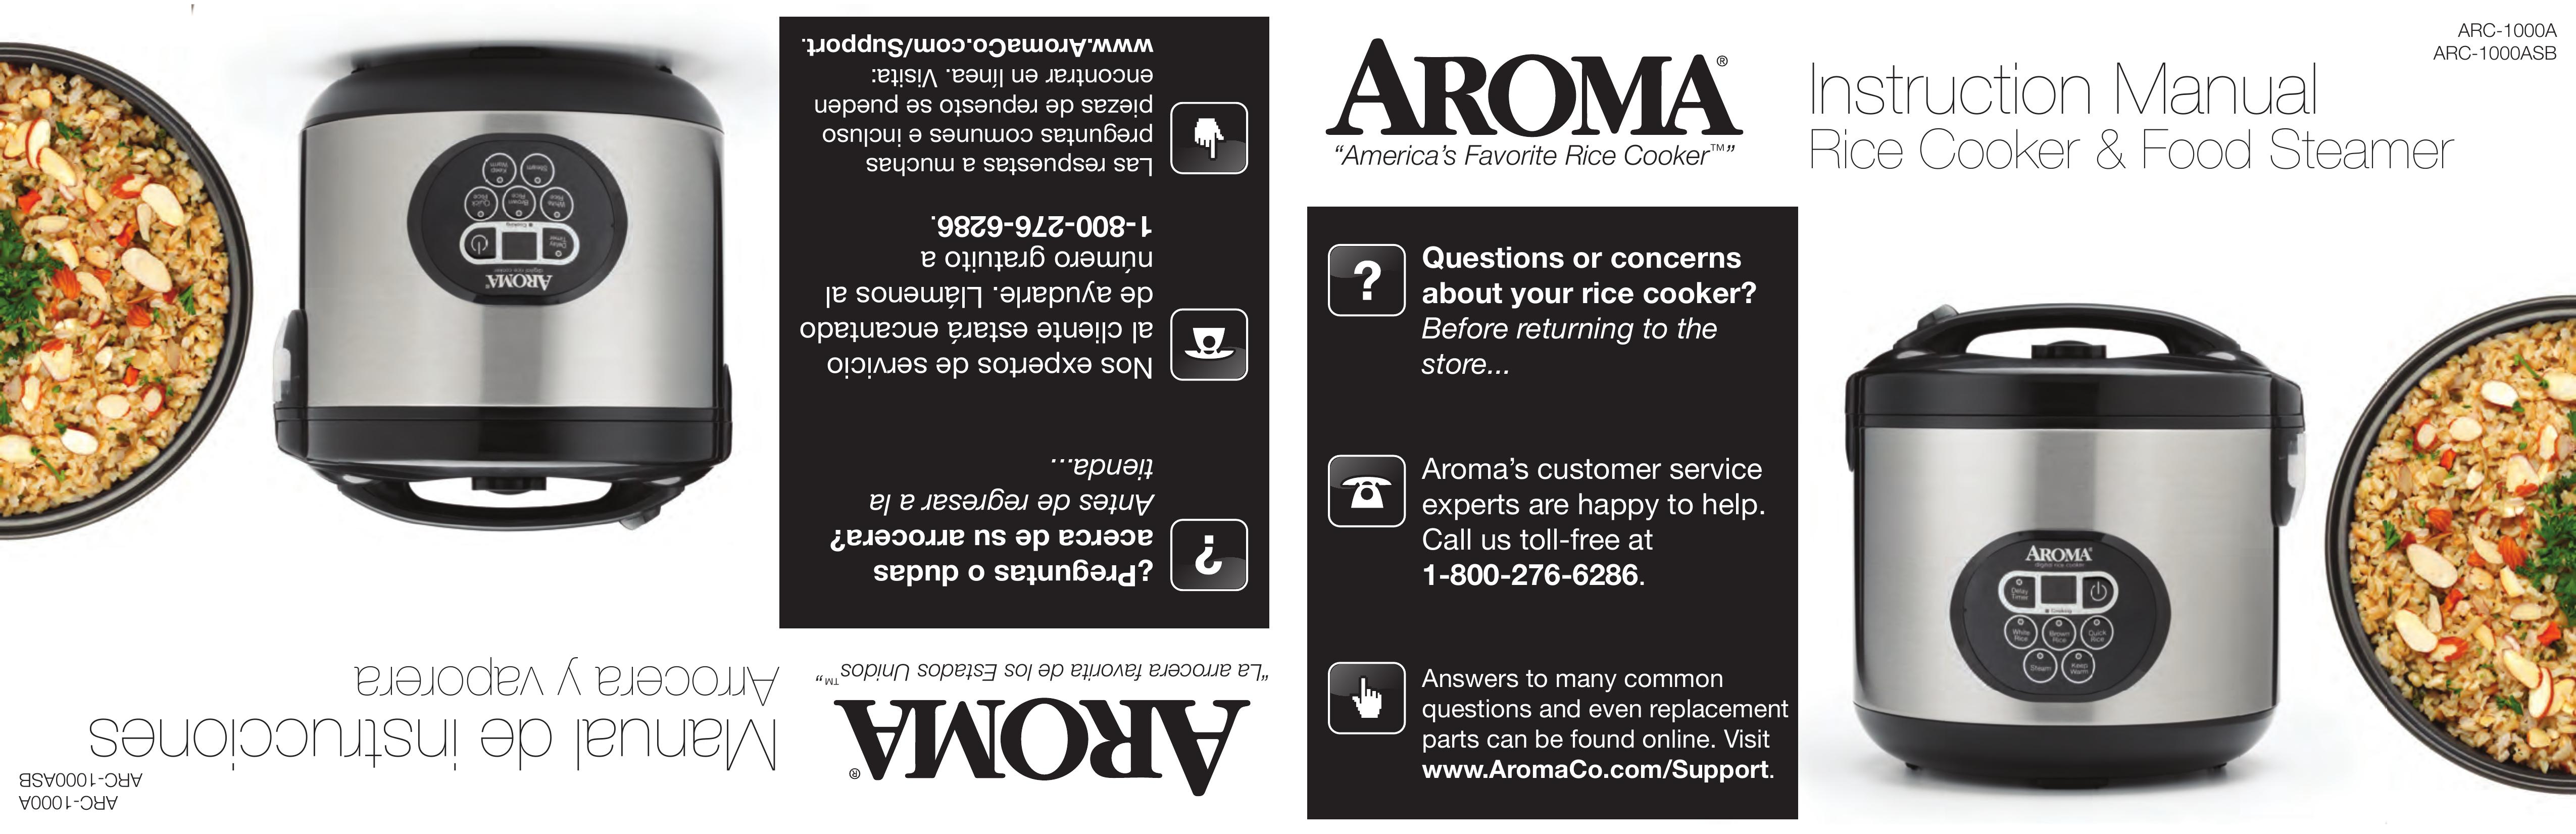 Aroma ARC-1000ASB Rice Cooker User Manual